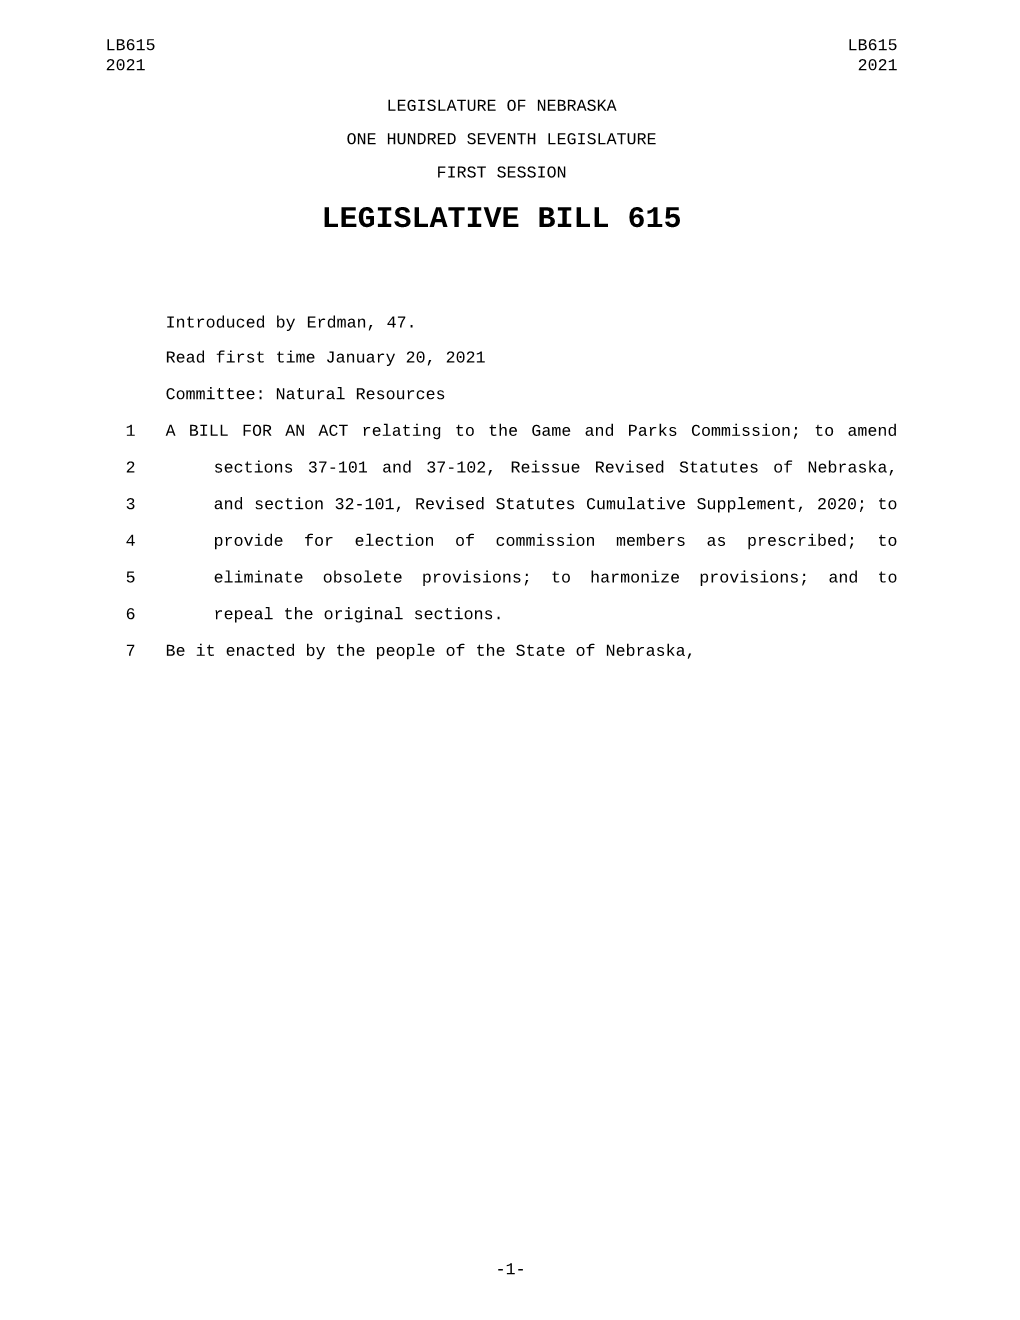 Legislative Bill 615